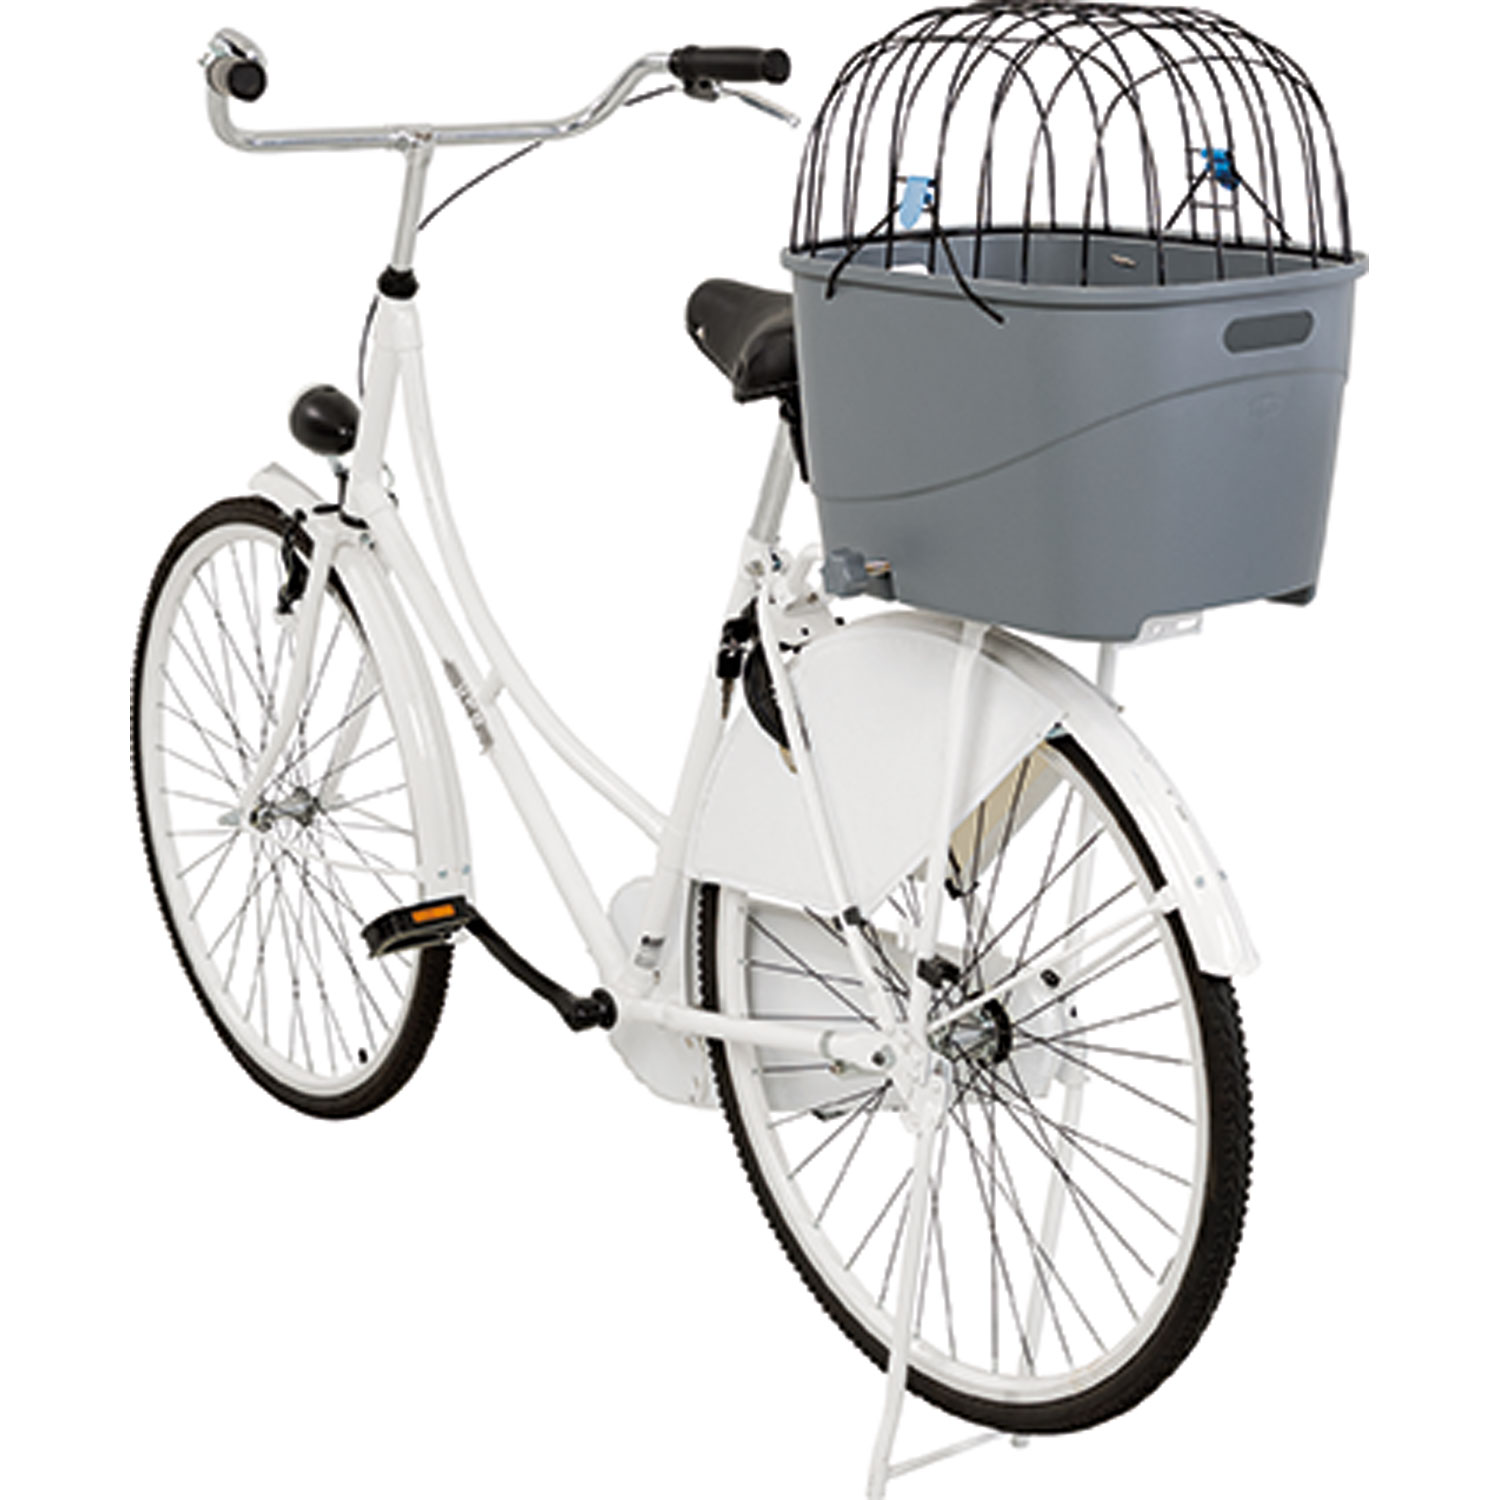 Especialmente Humorístico Paquete o empaquetar Cesta de Bicicleta para Portaequipajes, Plástico/metal, 36 × 47 × 46 cm,  Gris